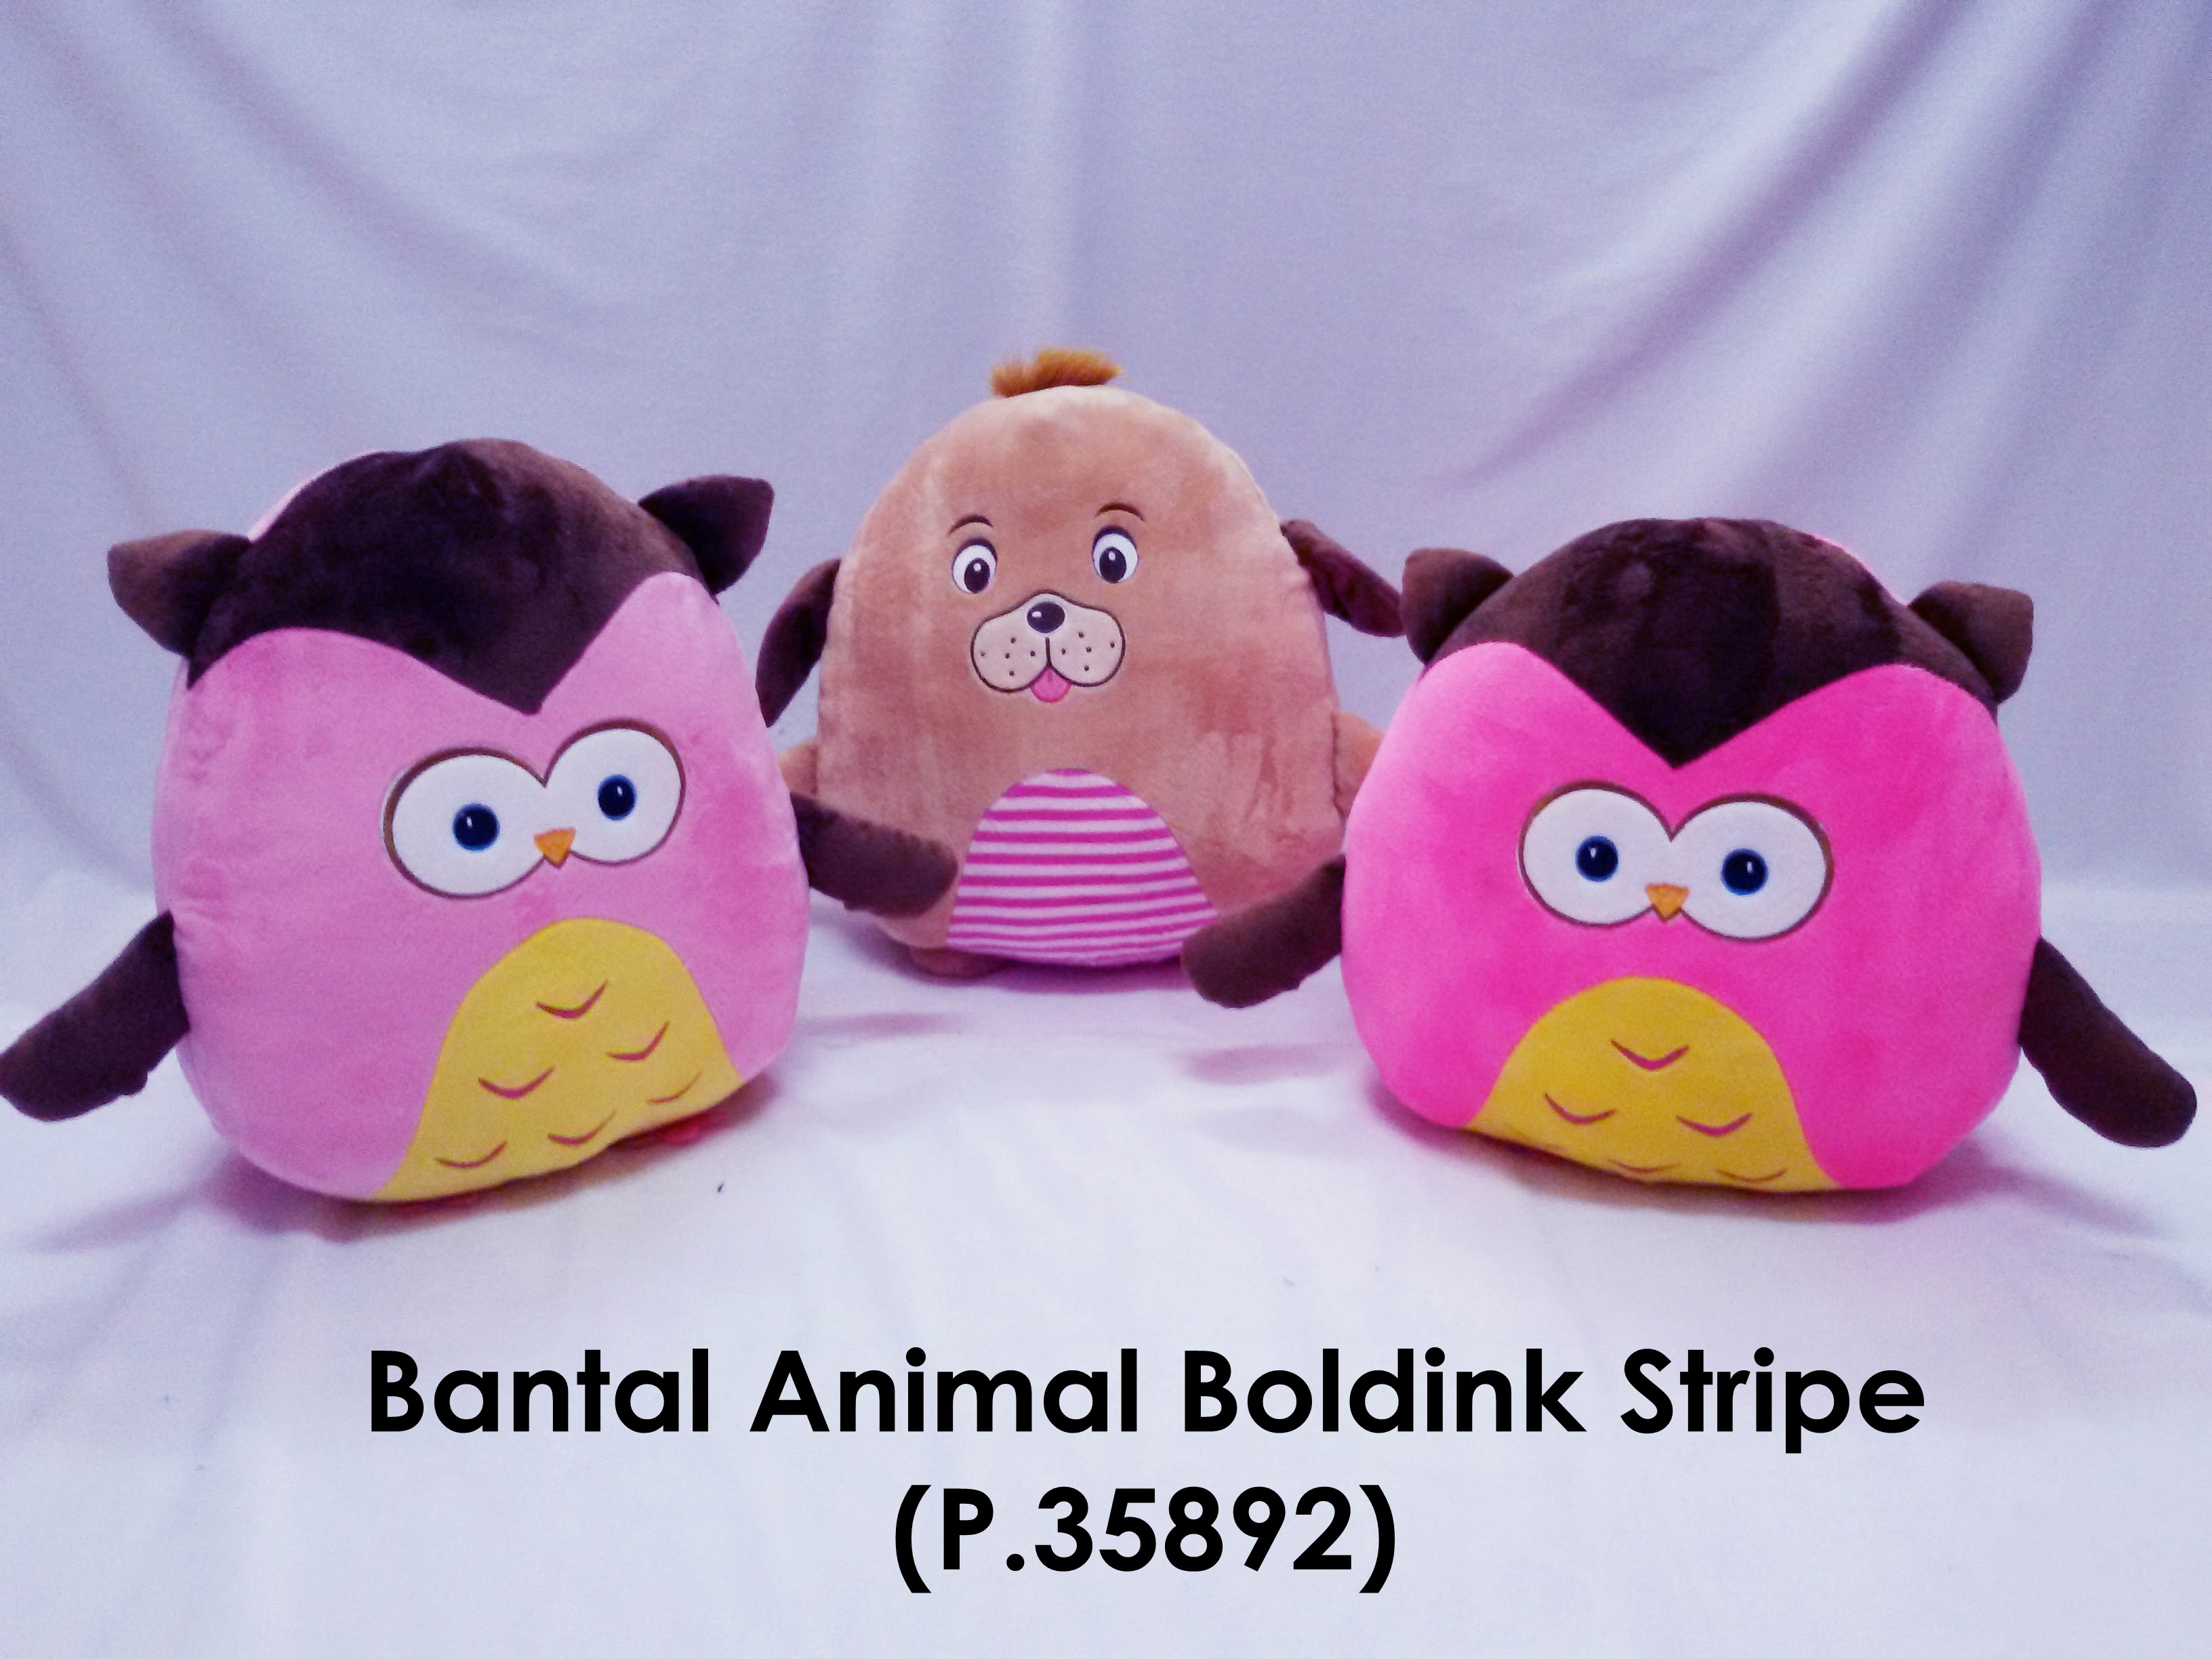 bantal animal boldink stripe P.35892.jpg